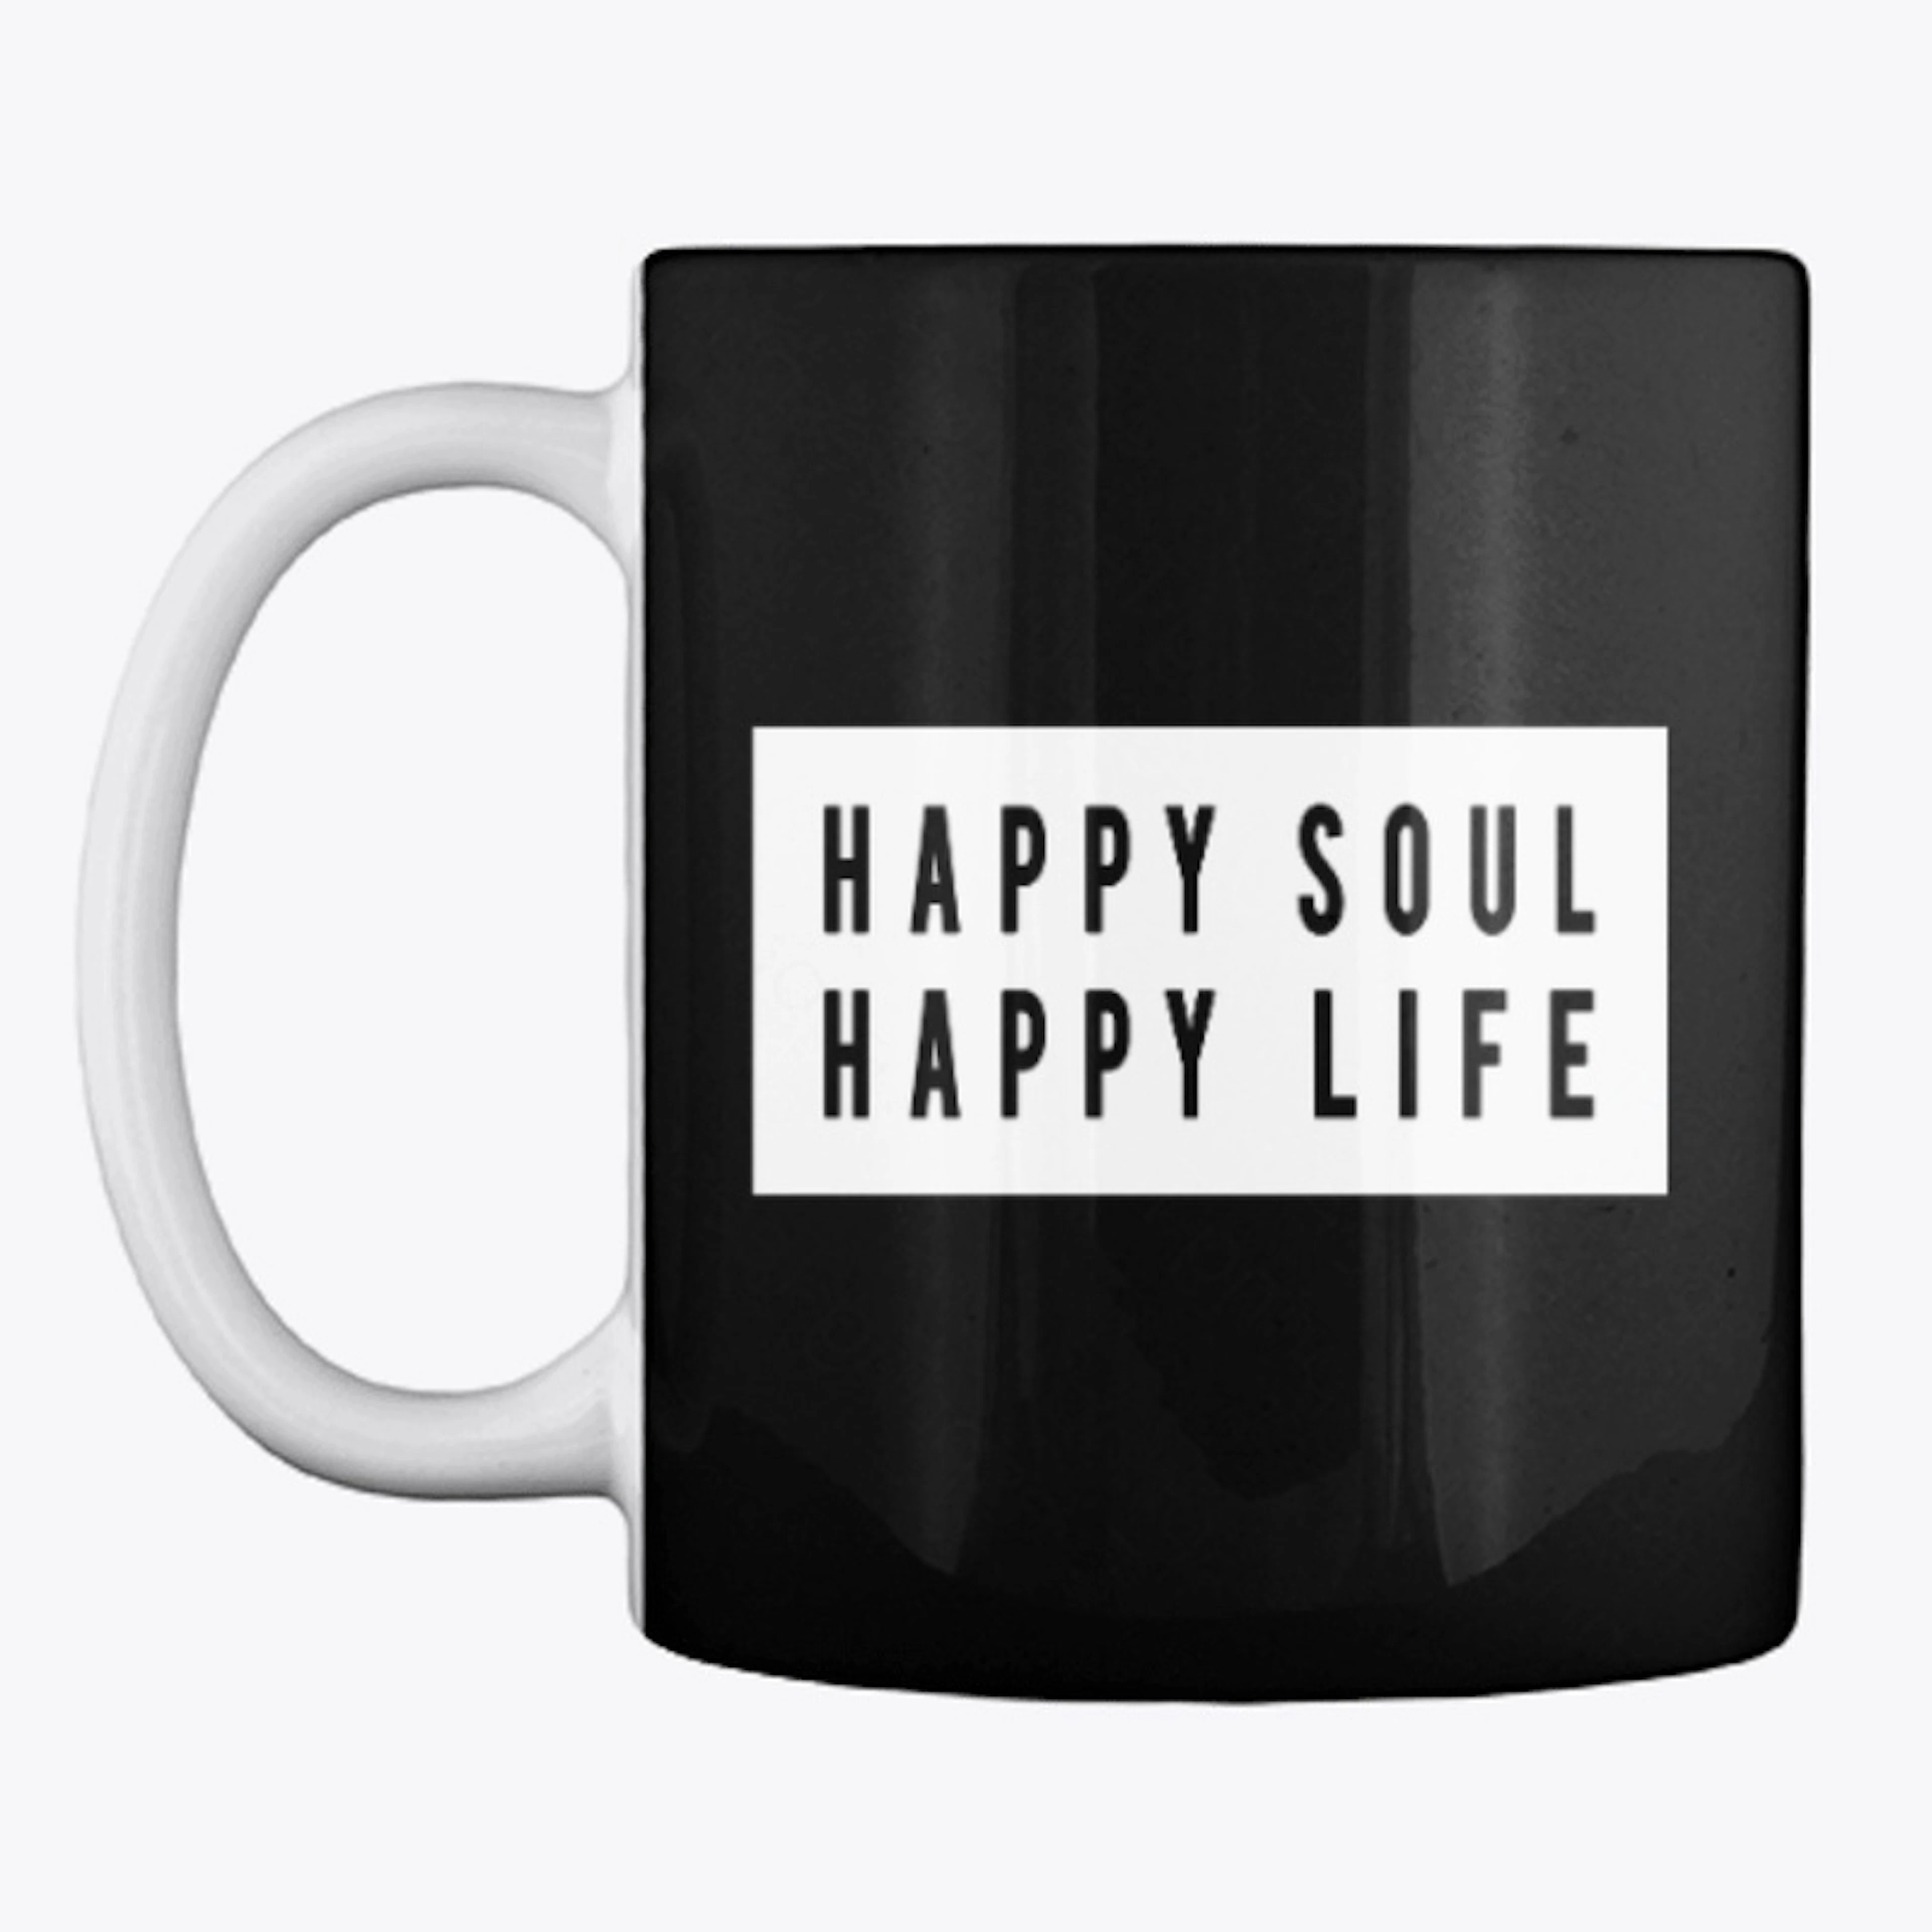 Happy soul Happy life coffee mug 